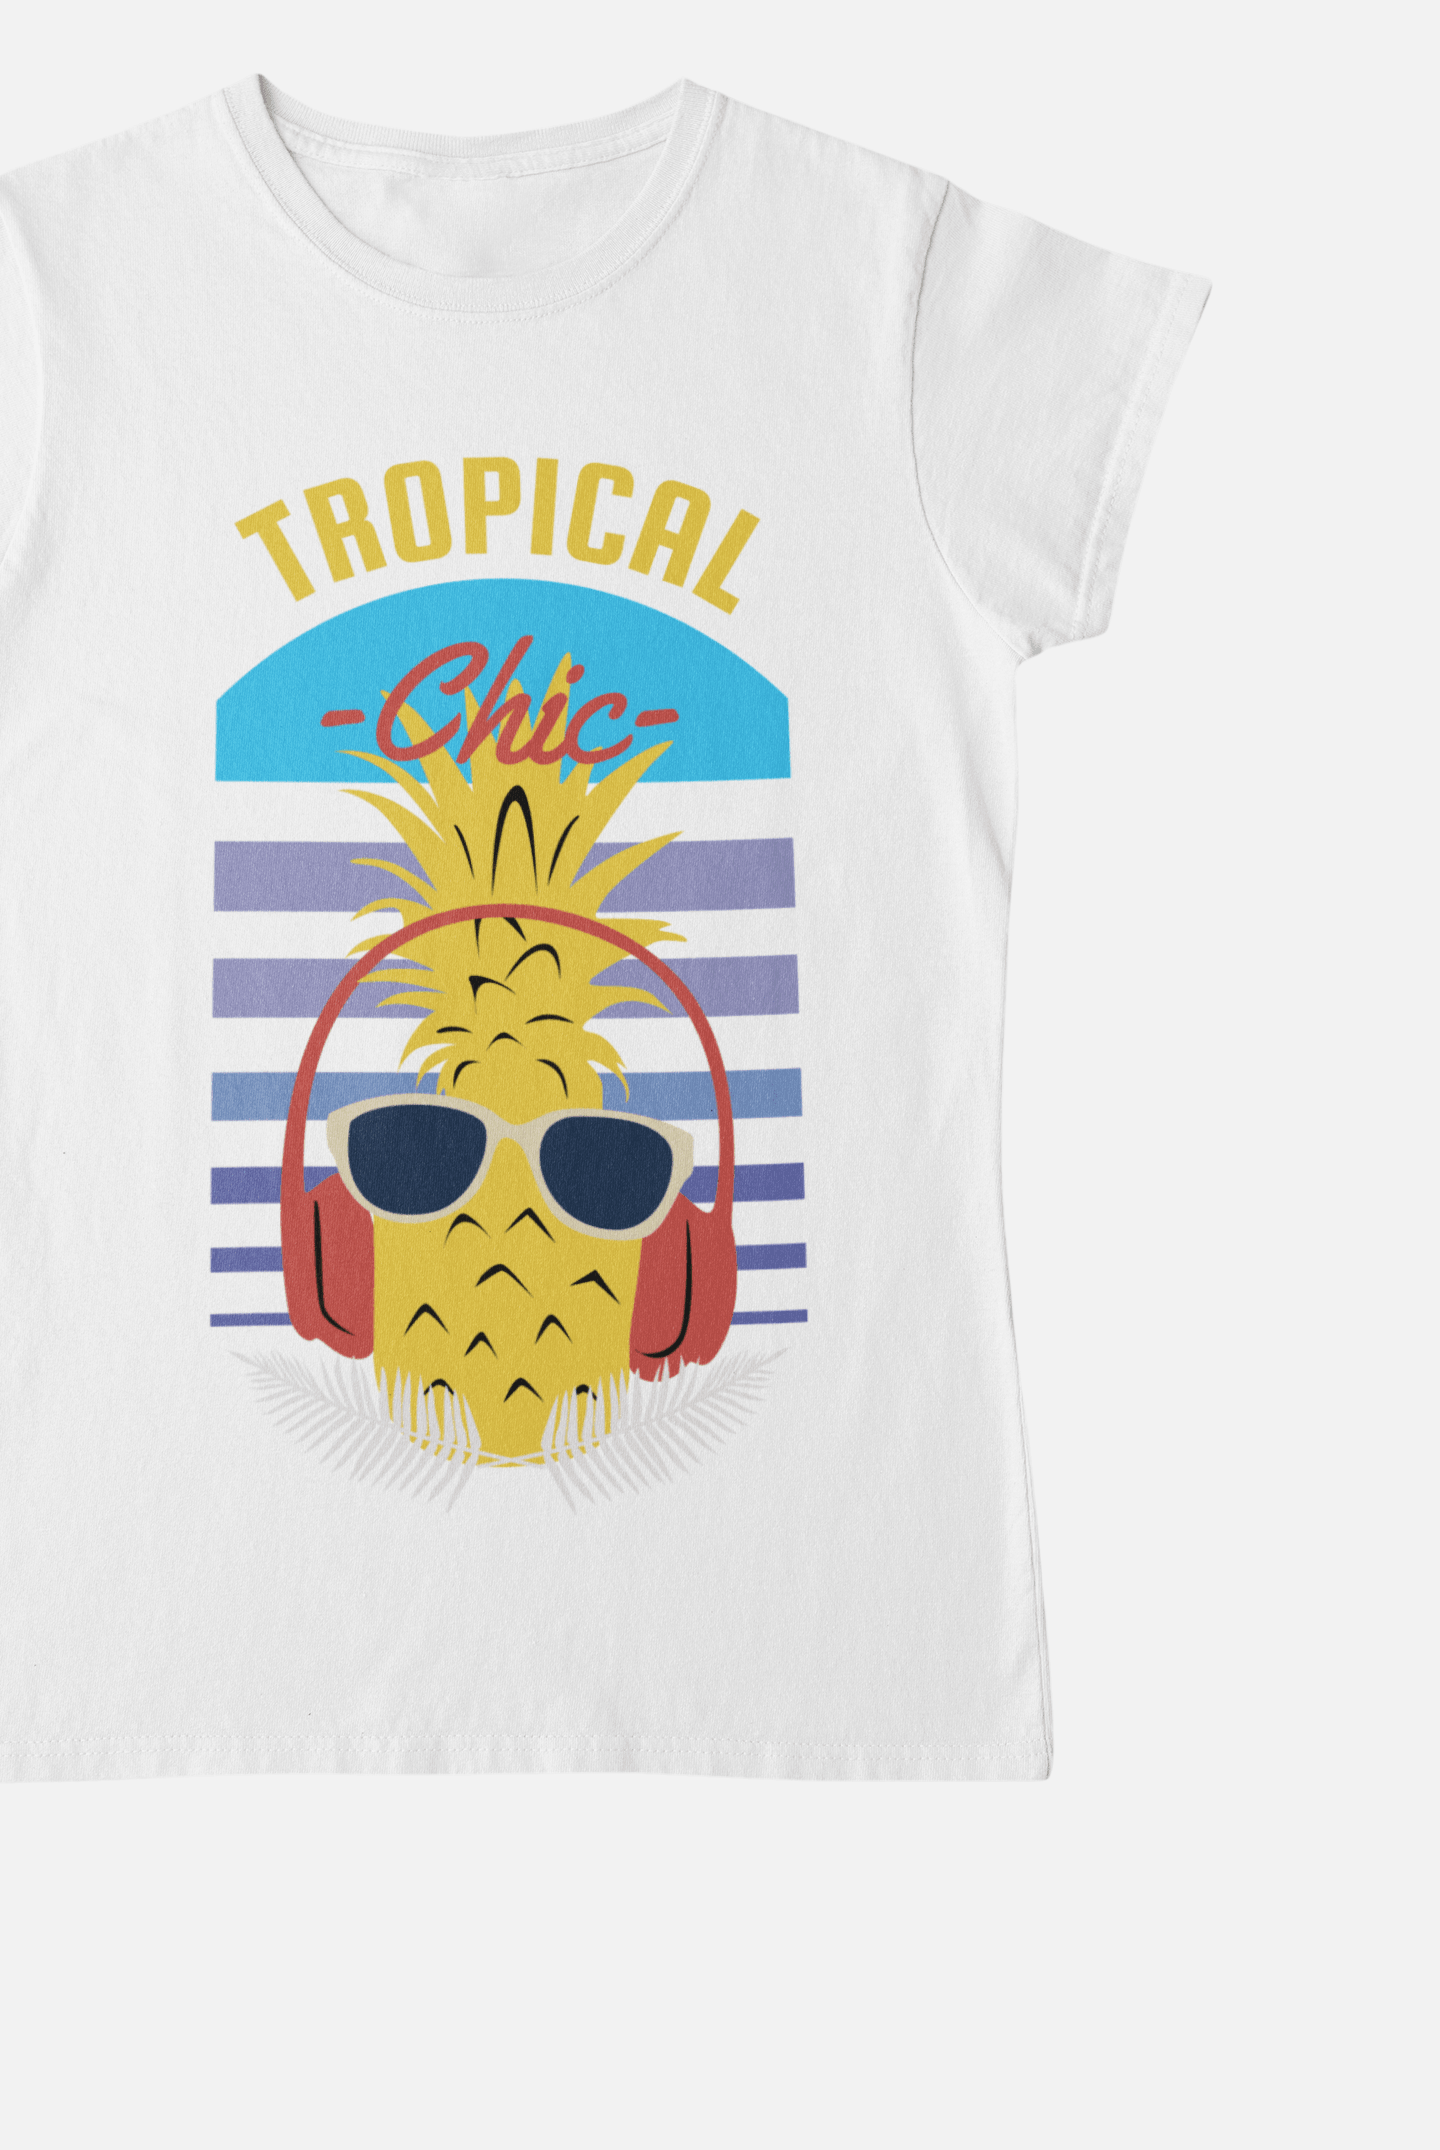 Tropical Chic - ATOM